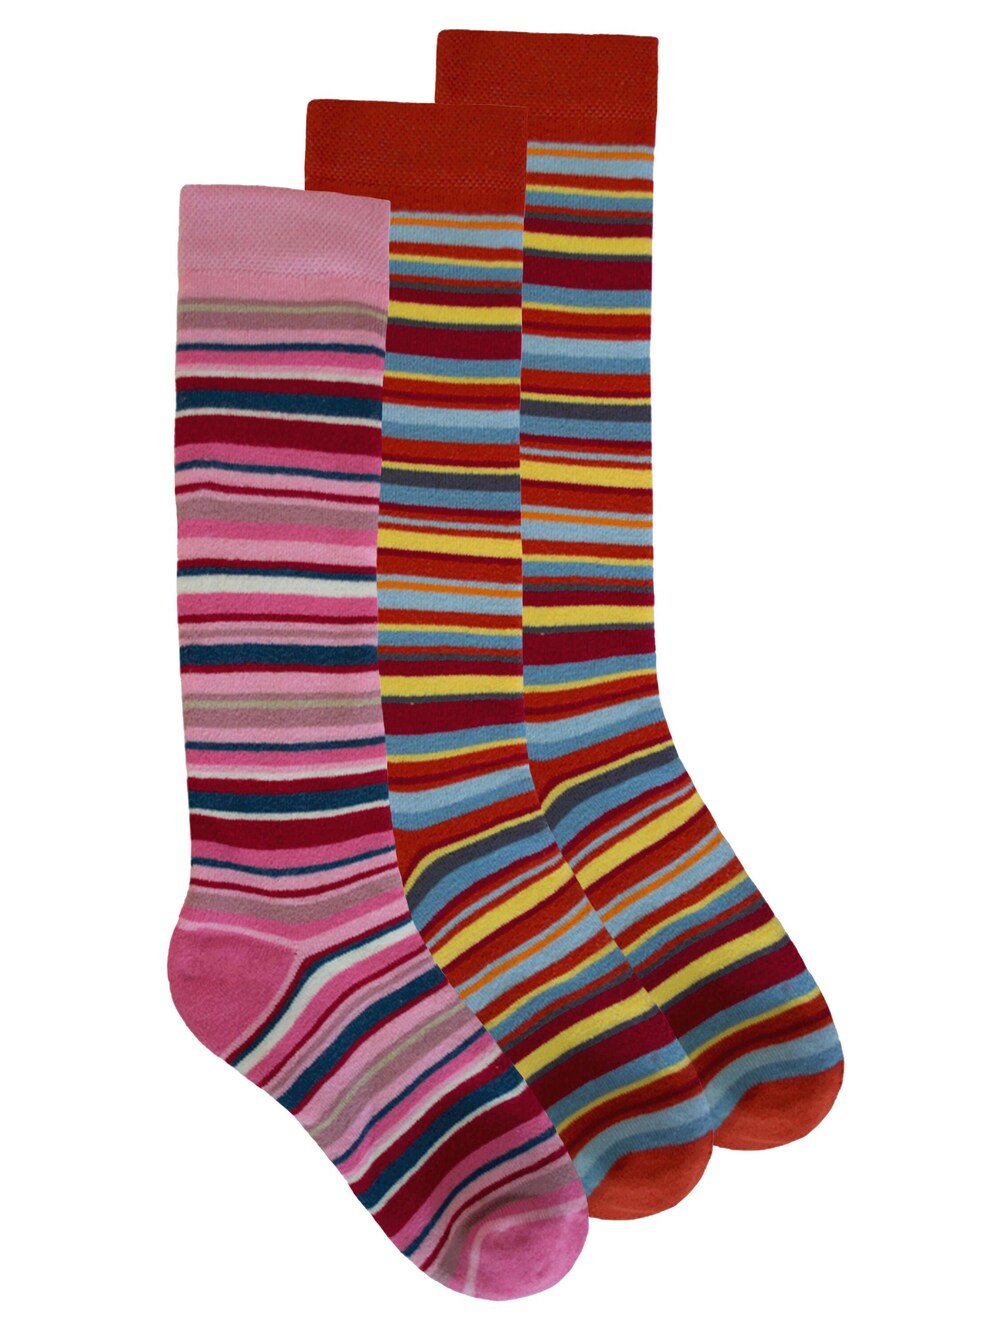 Носки Normani, смешанные цвета носки h i s смешанные цвета